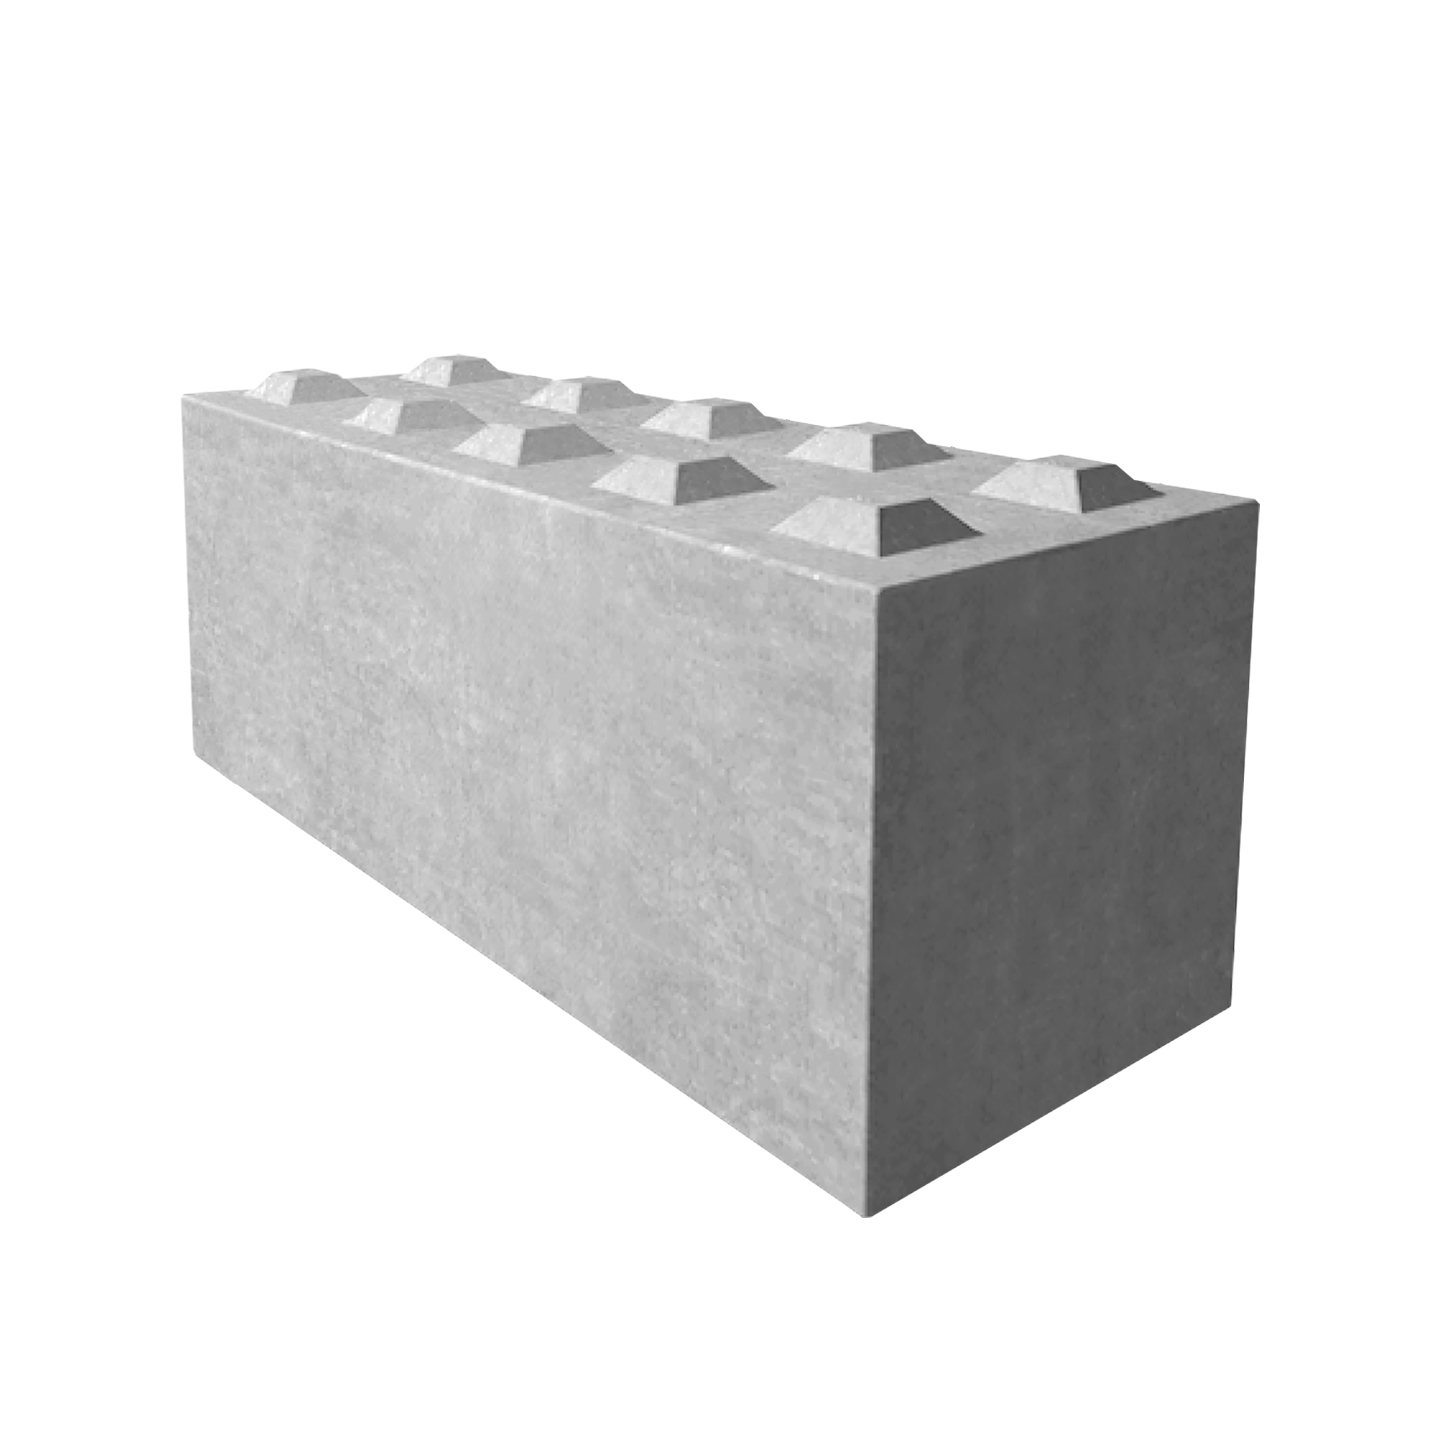 Concrete block 200x80x80 cm 